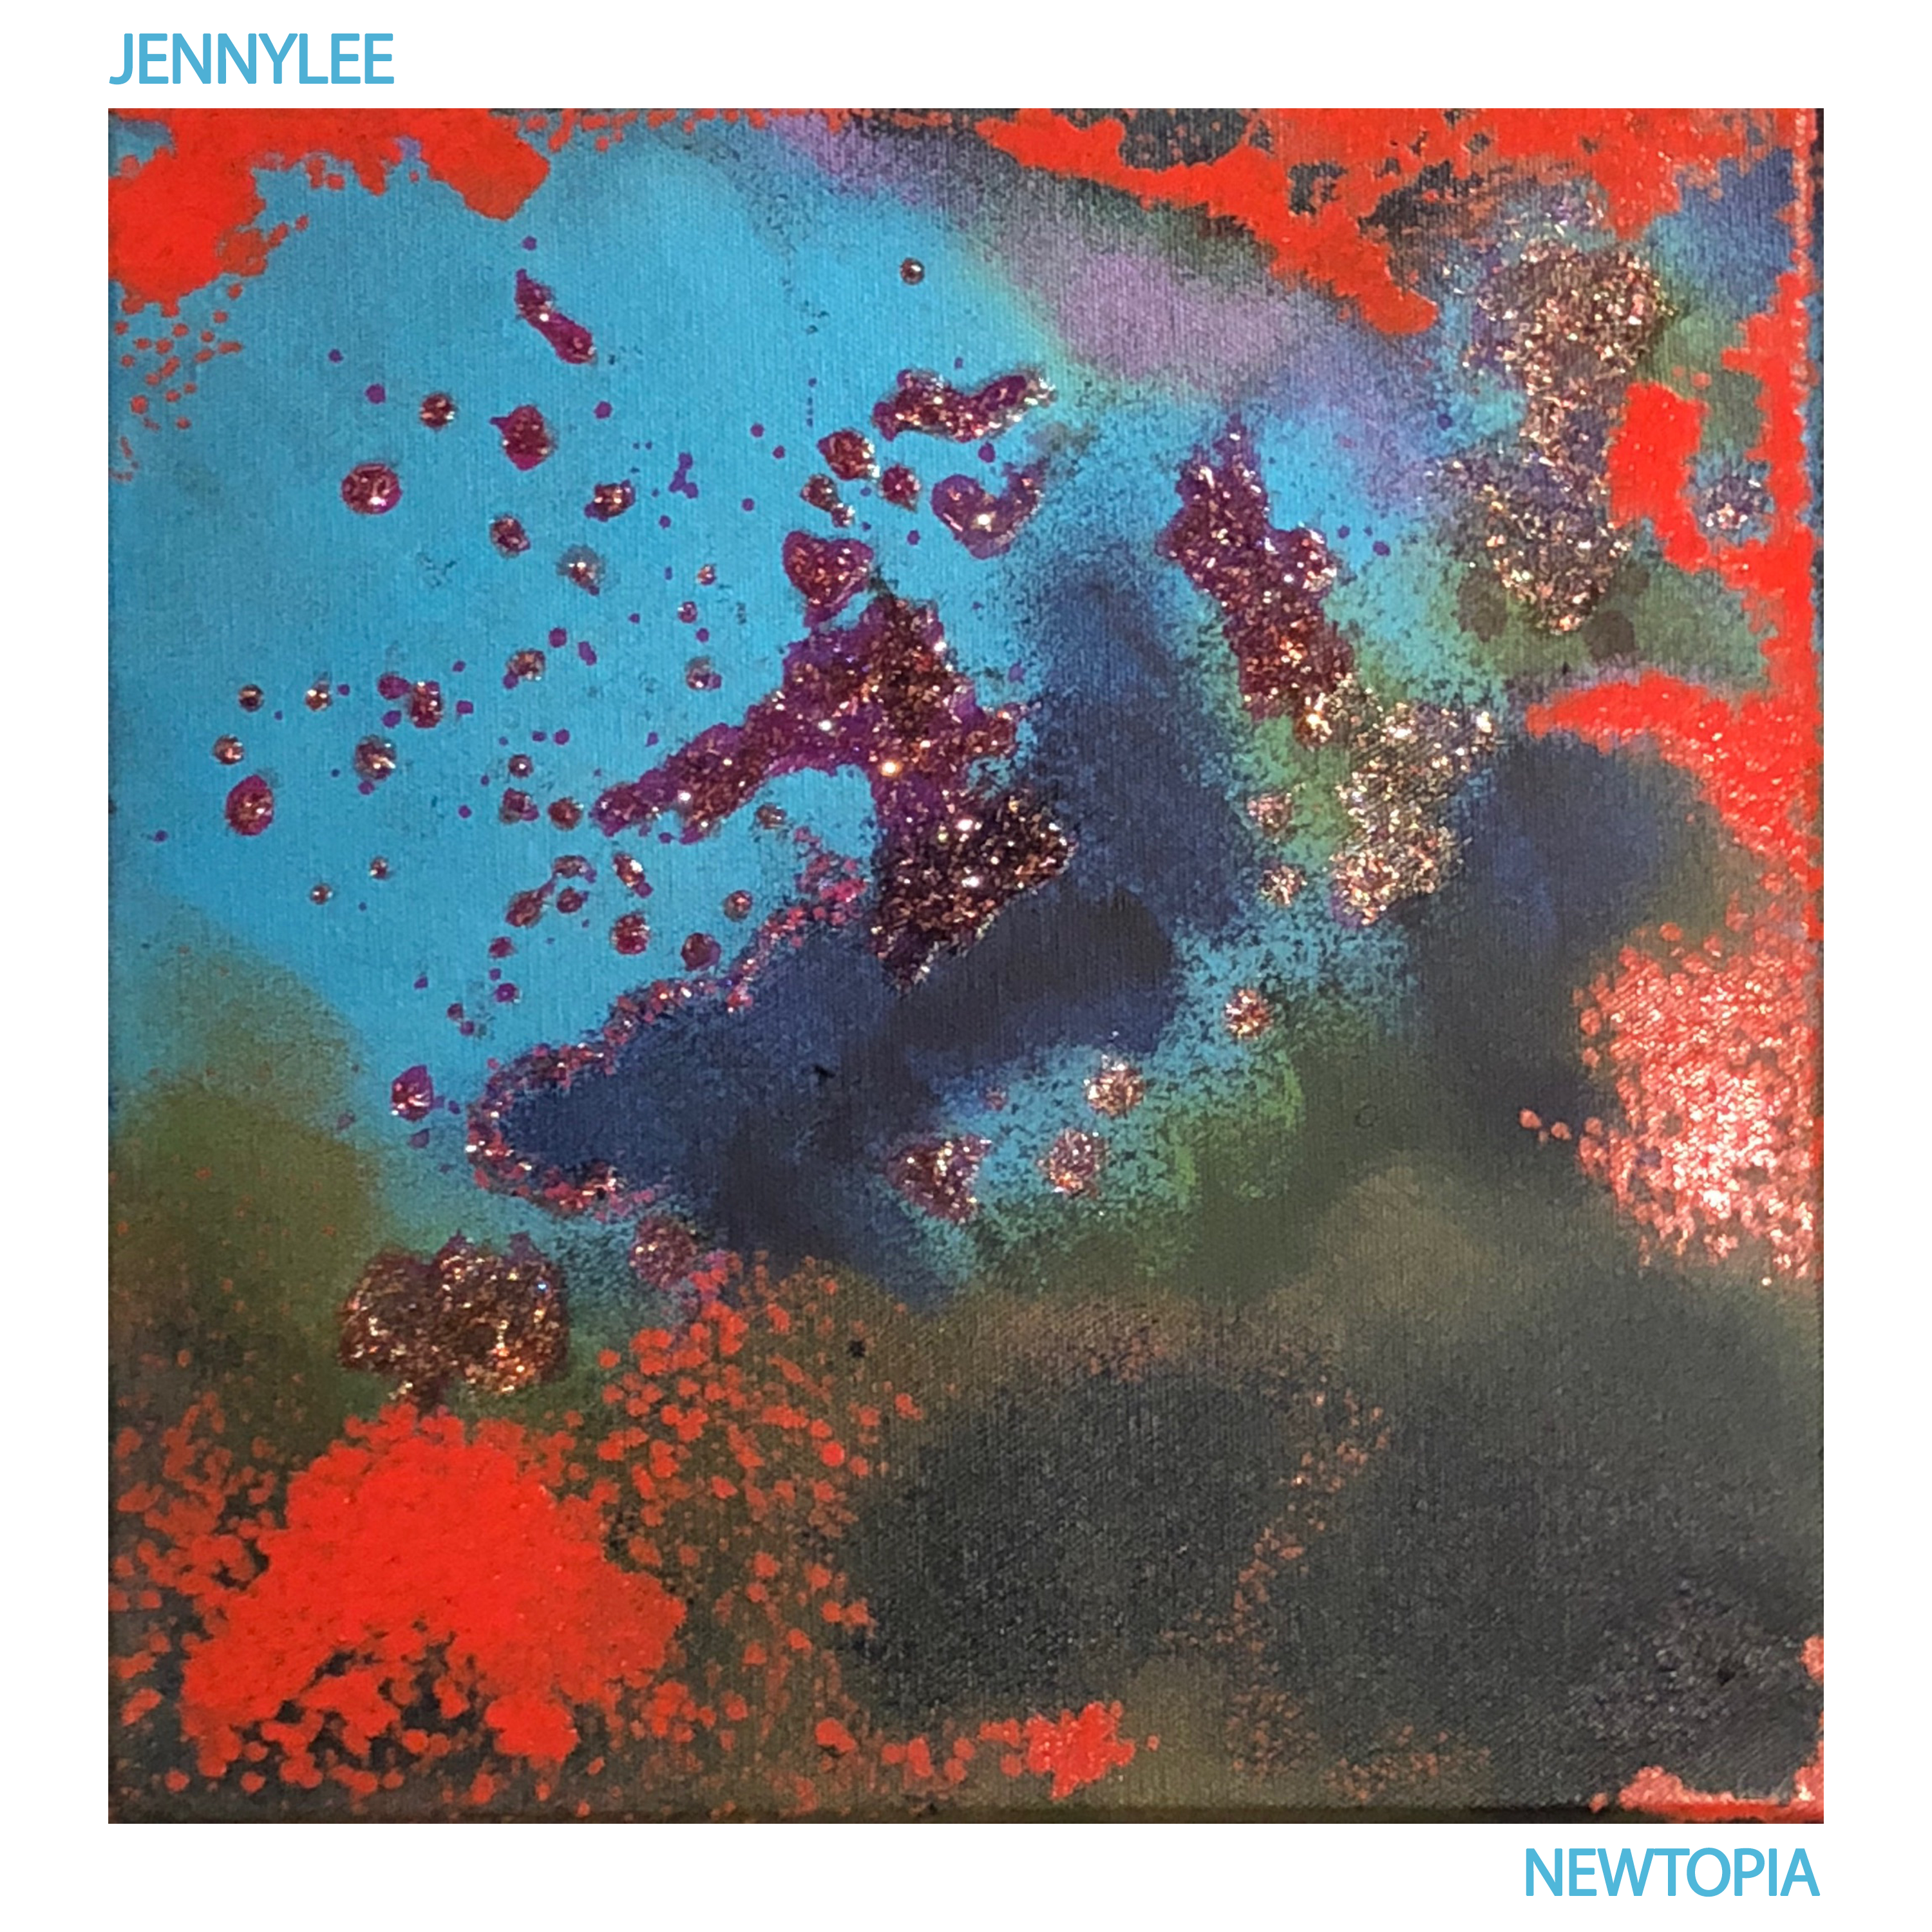 Jenny Lee - Newtopia / Clinique: Vinyl 7" Single